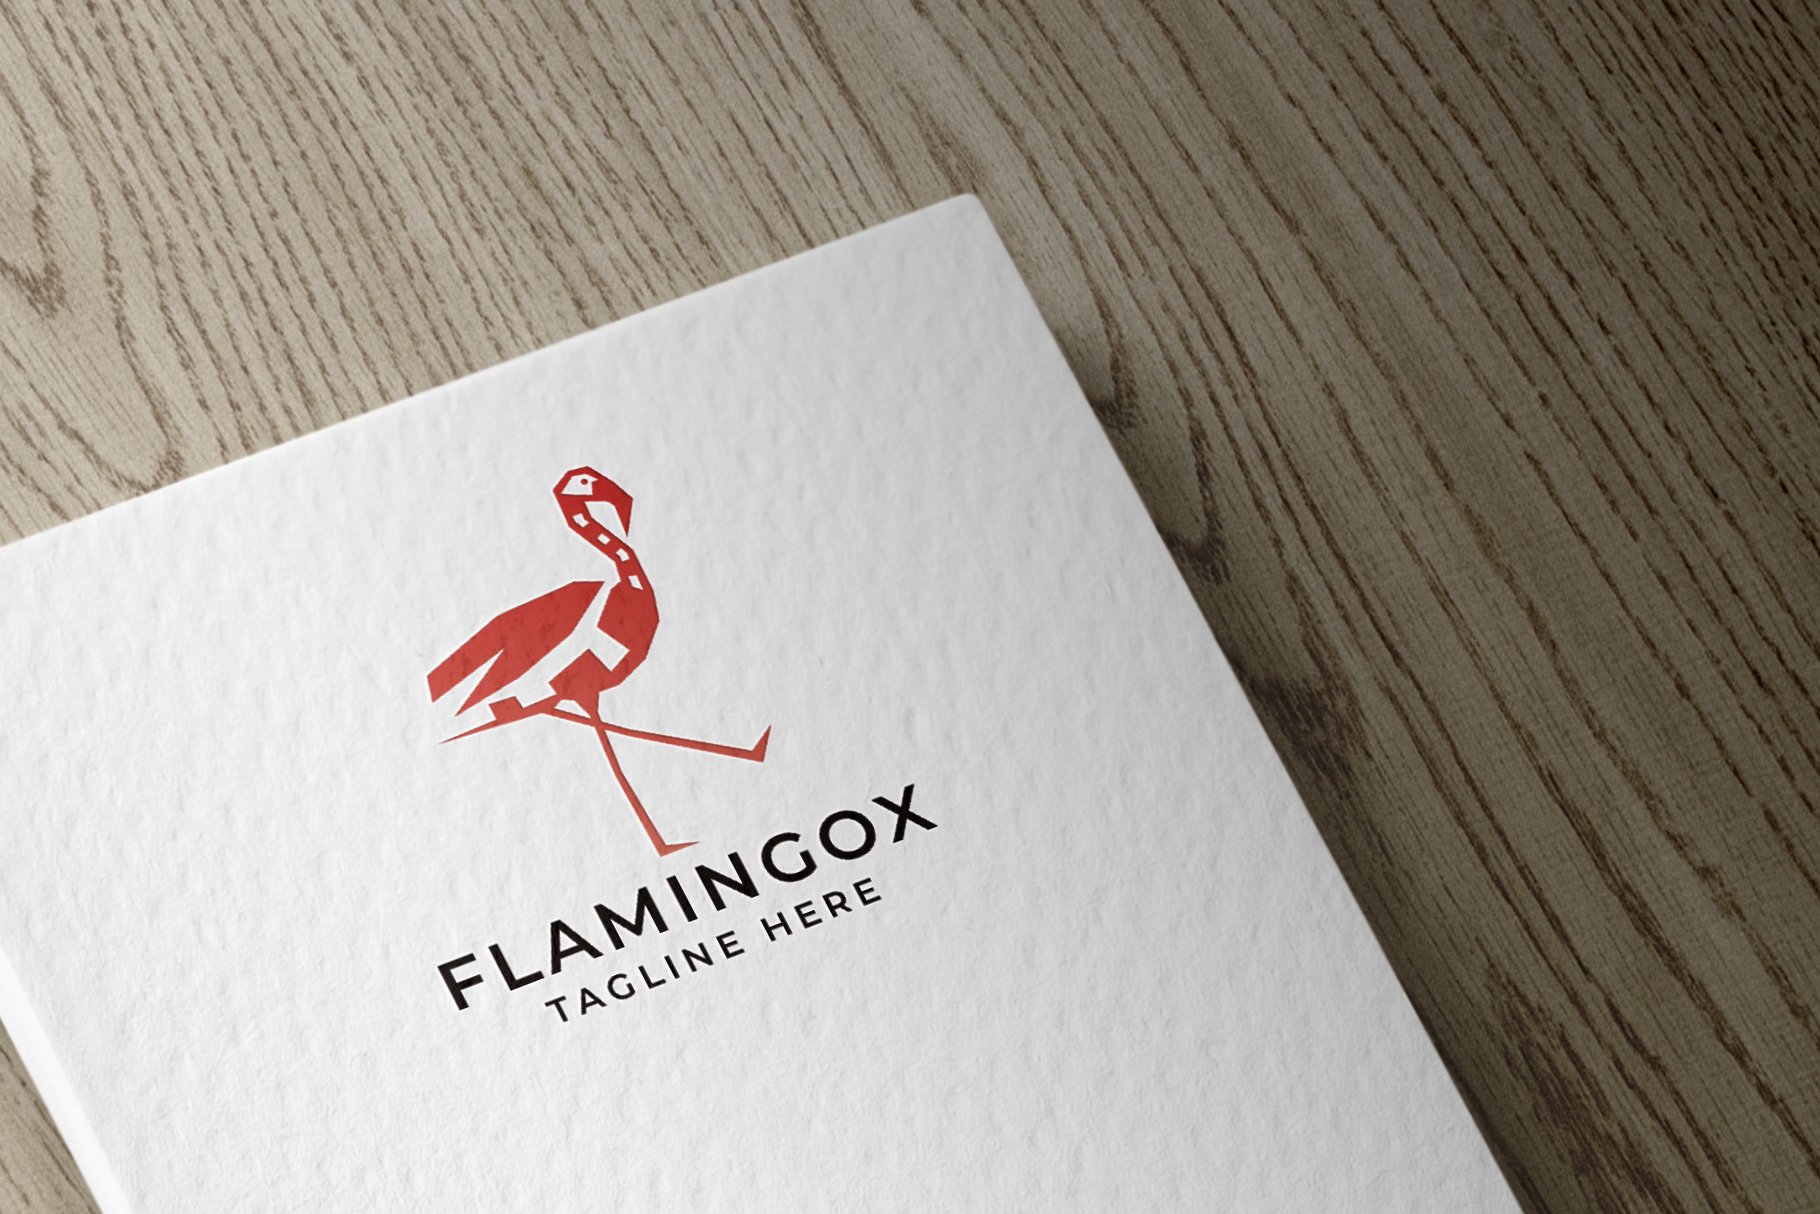 Flamingo Pixel Pro Logo Template cover image.